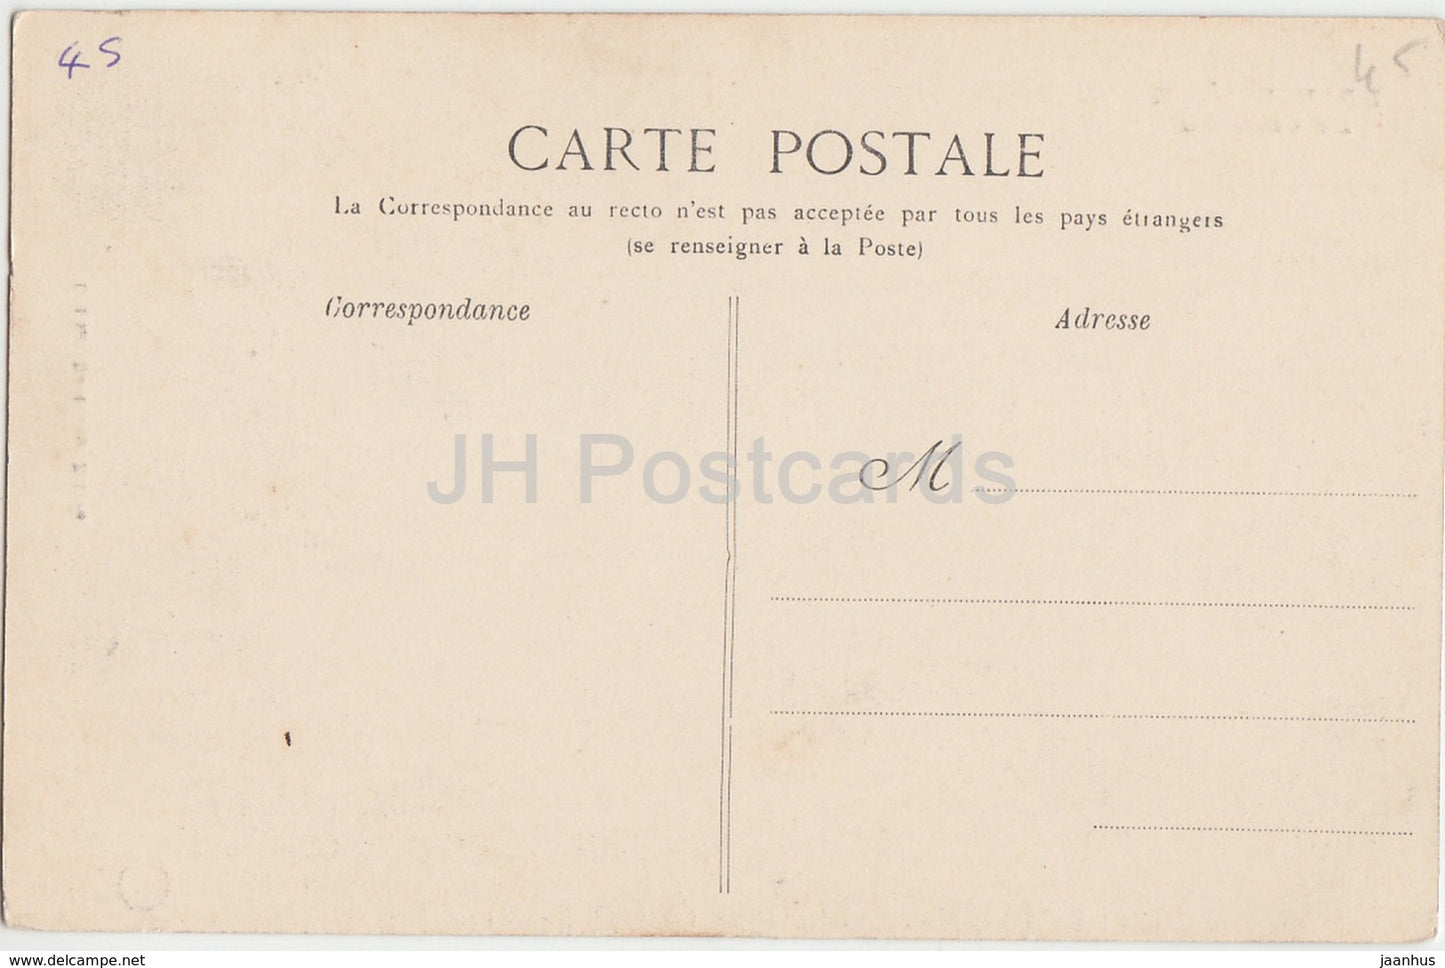 La Bussiere - Le Chateau - Schloss - alte Postkarte - Frankreich - unbenutzt